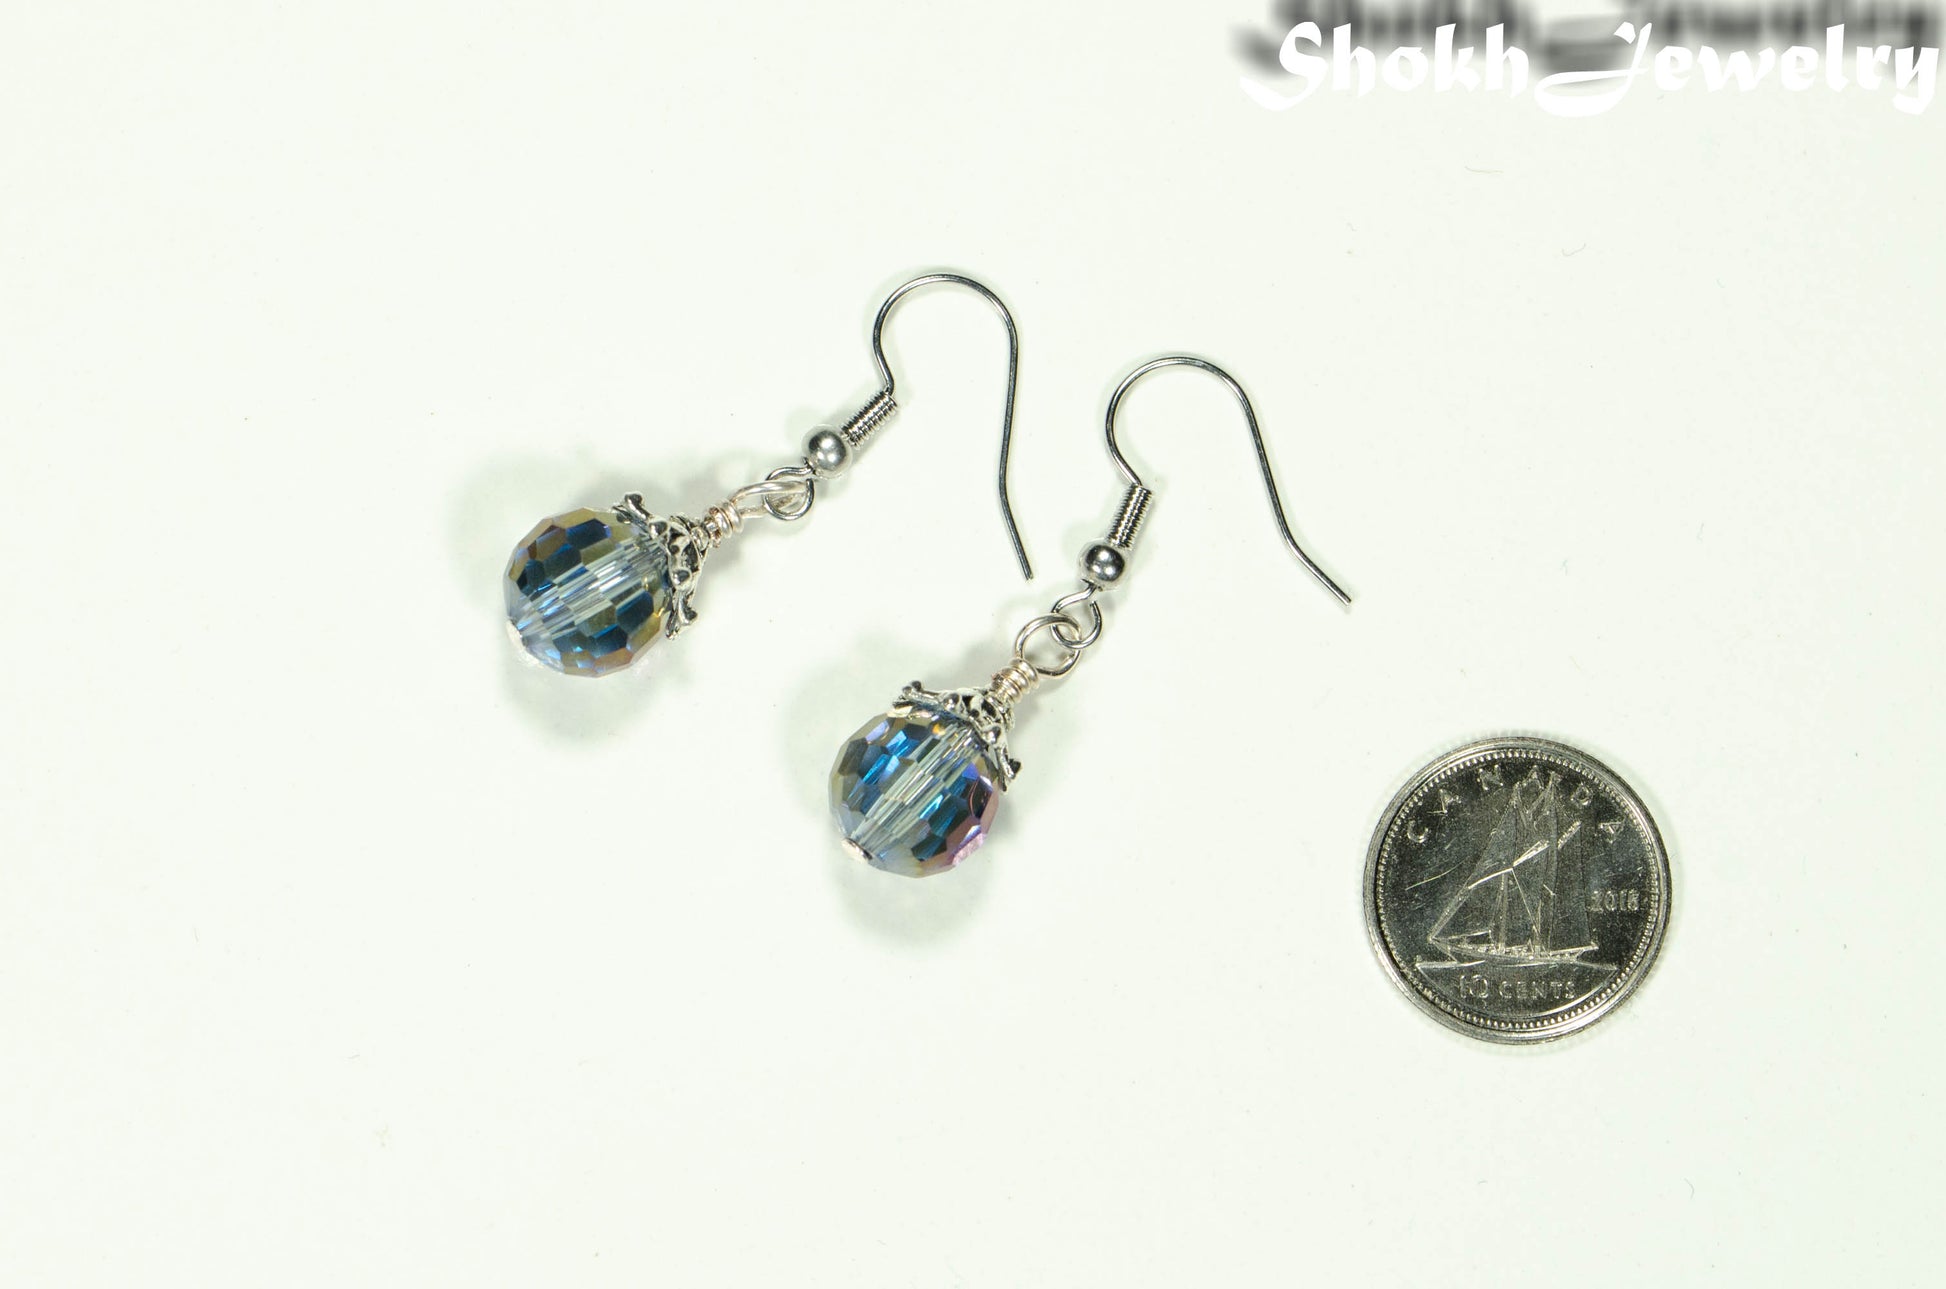 10mm Glass Crystal Disco Ball Earrings beside a dime.